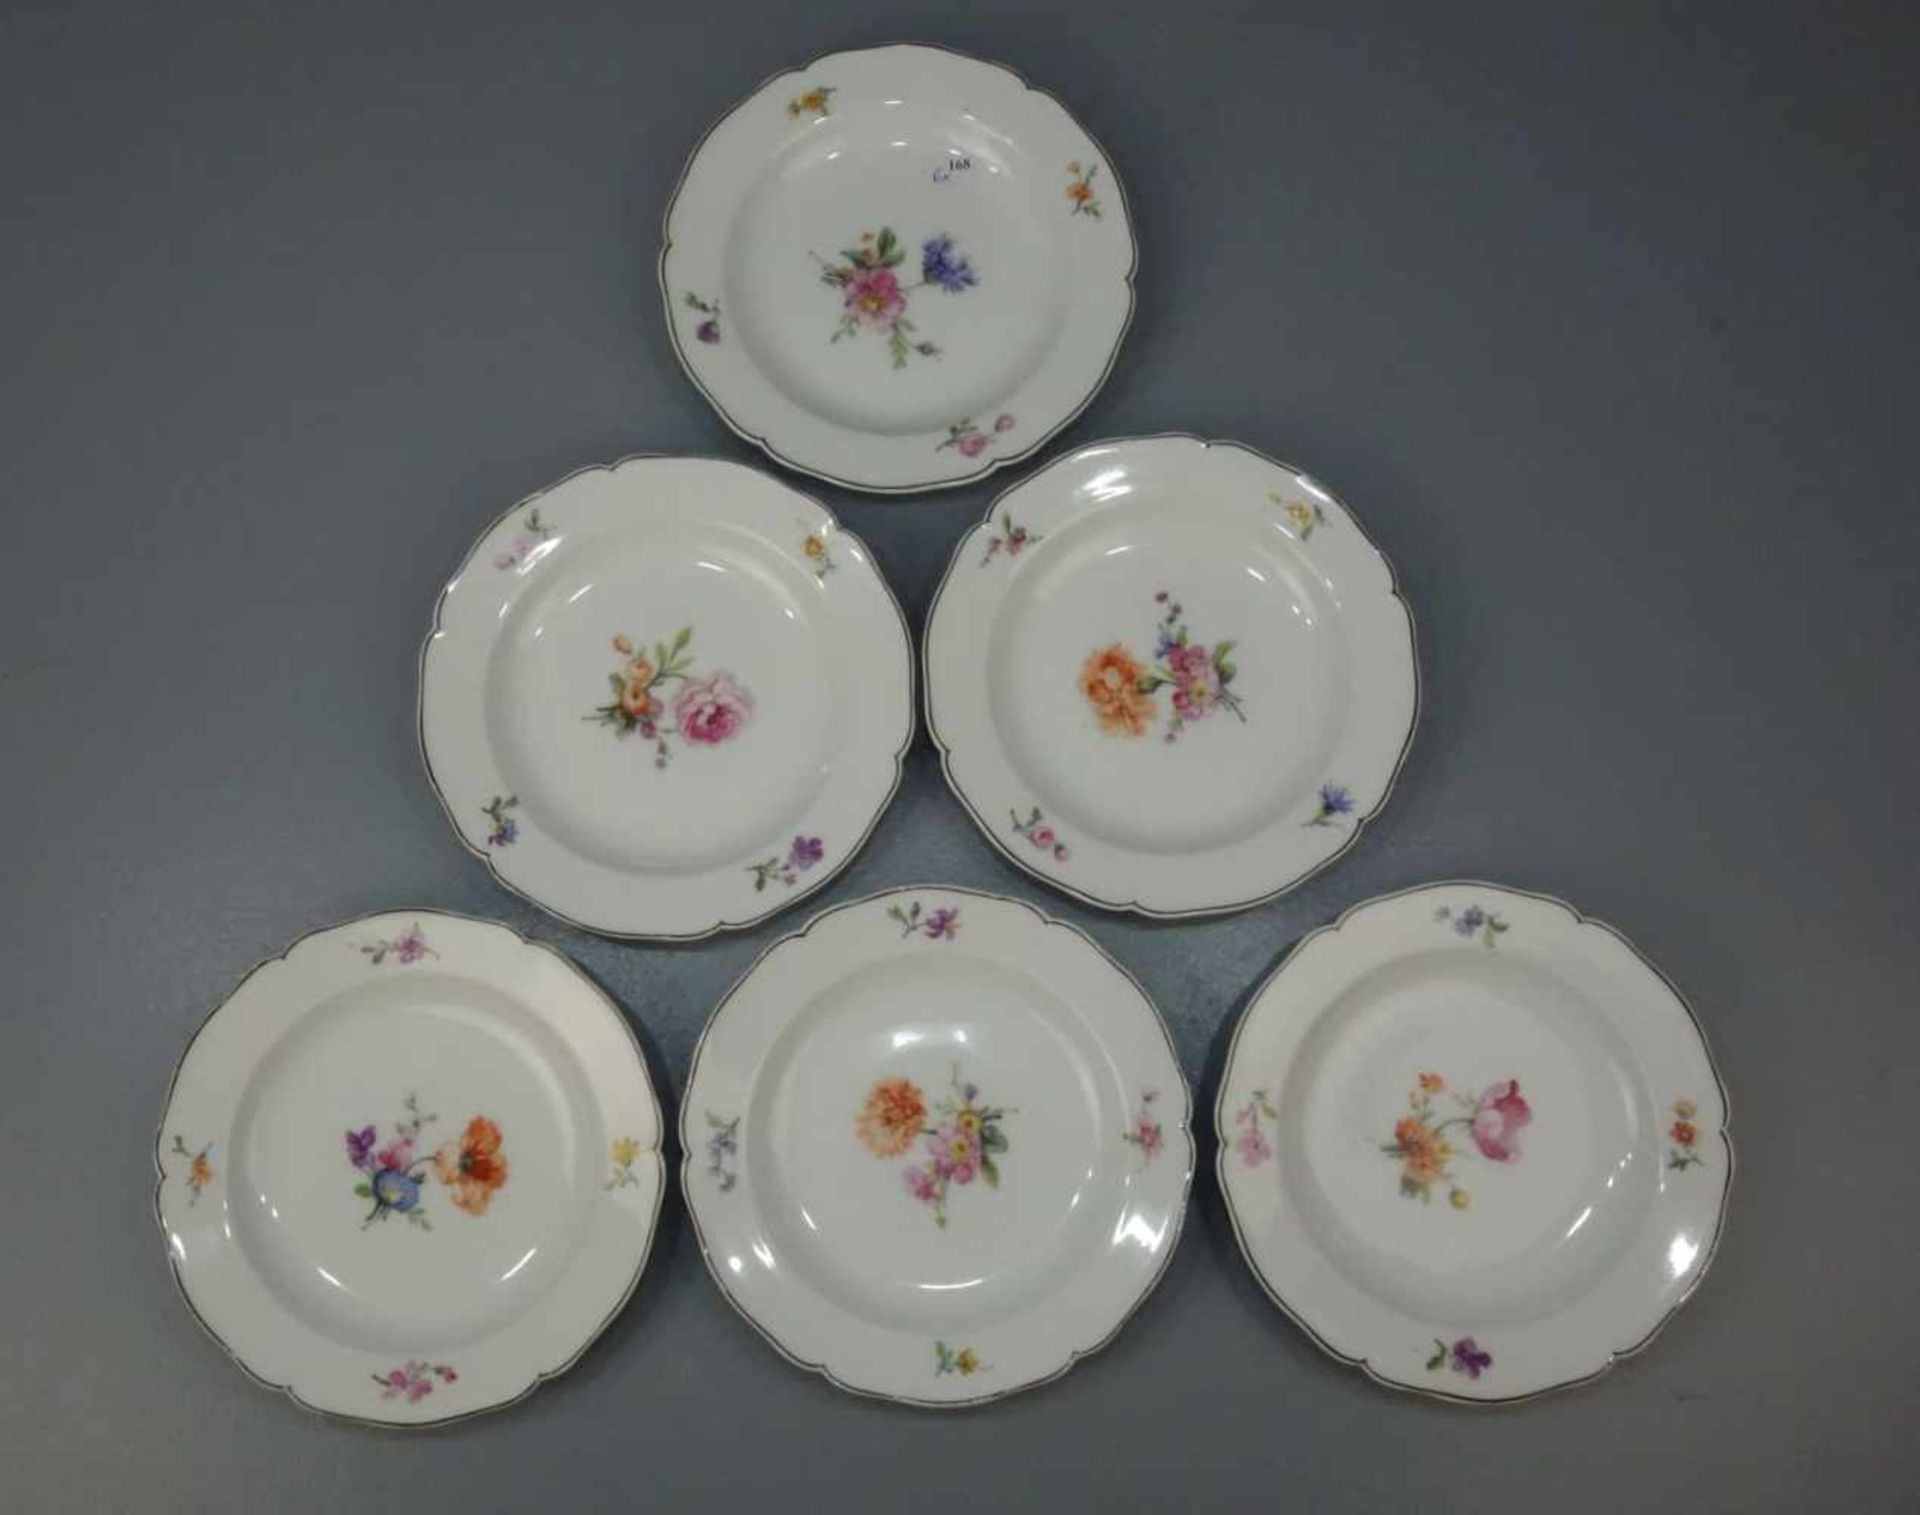 6 BROTTELLER / DESSERT - TELLER / porcelain plates, Porzellan, KPM - Königliche